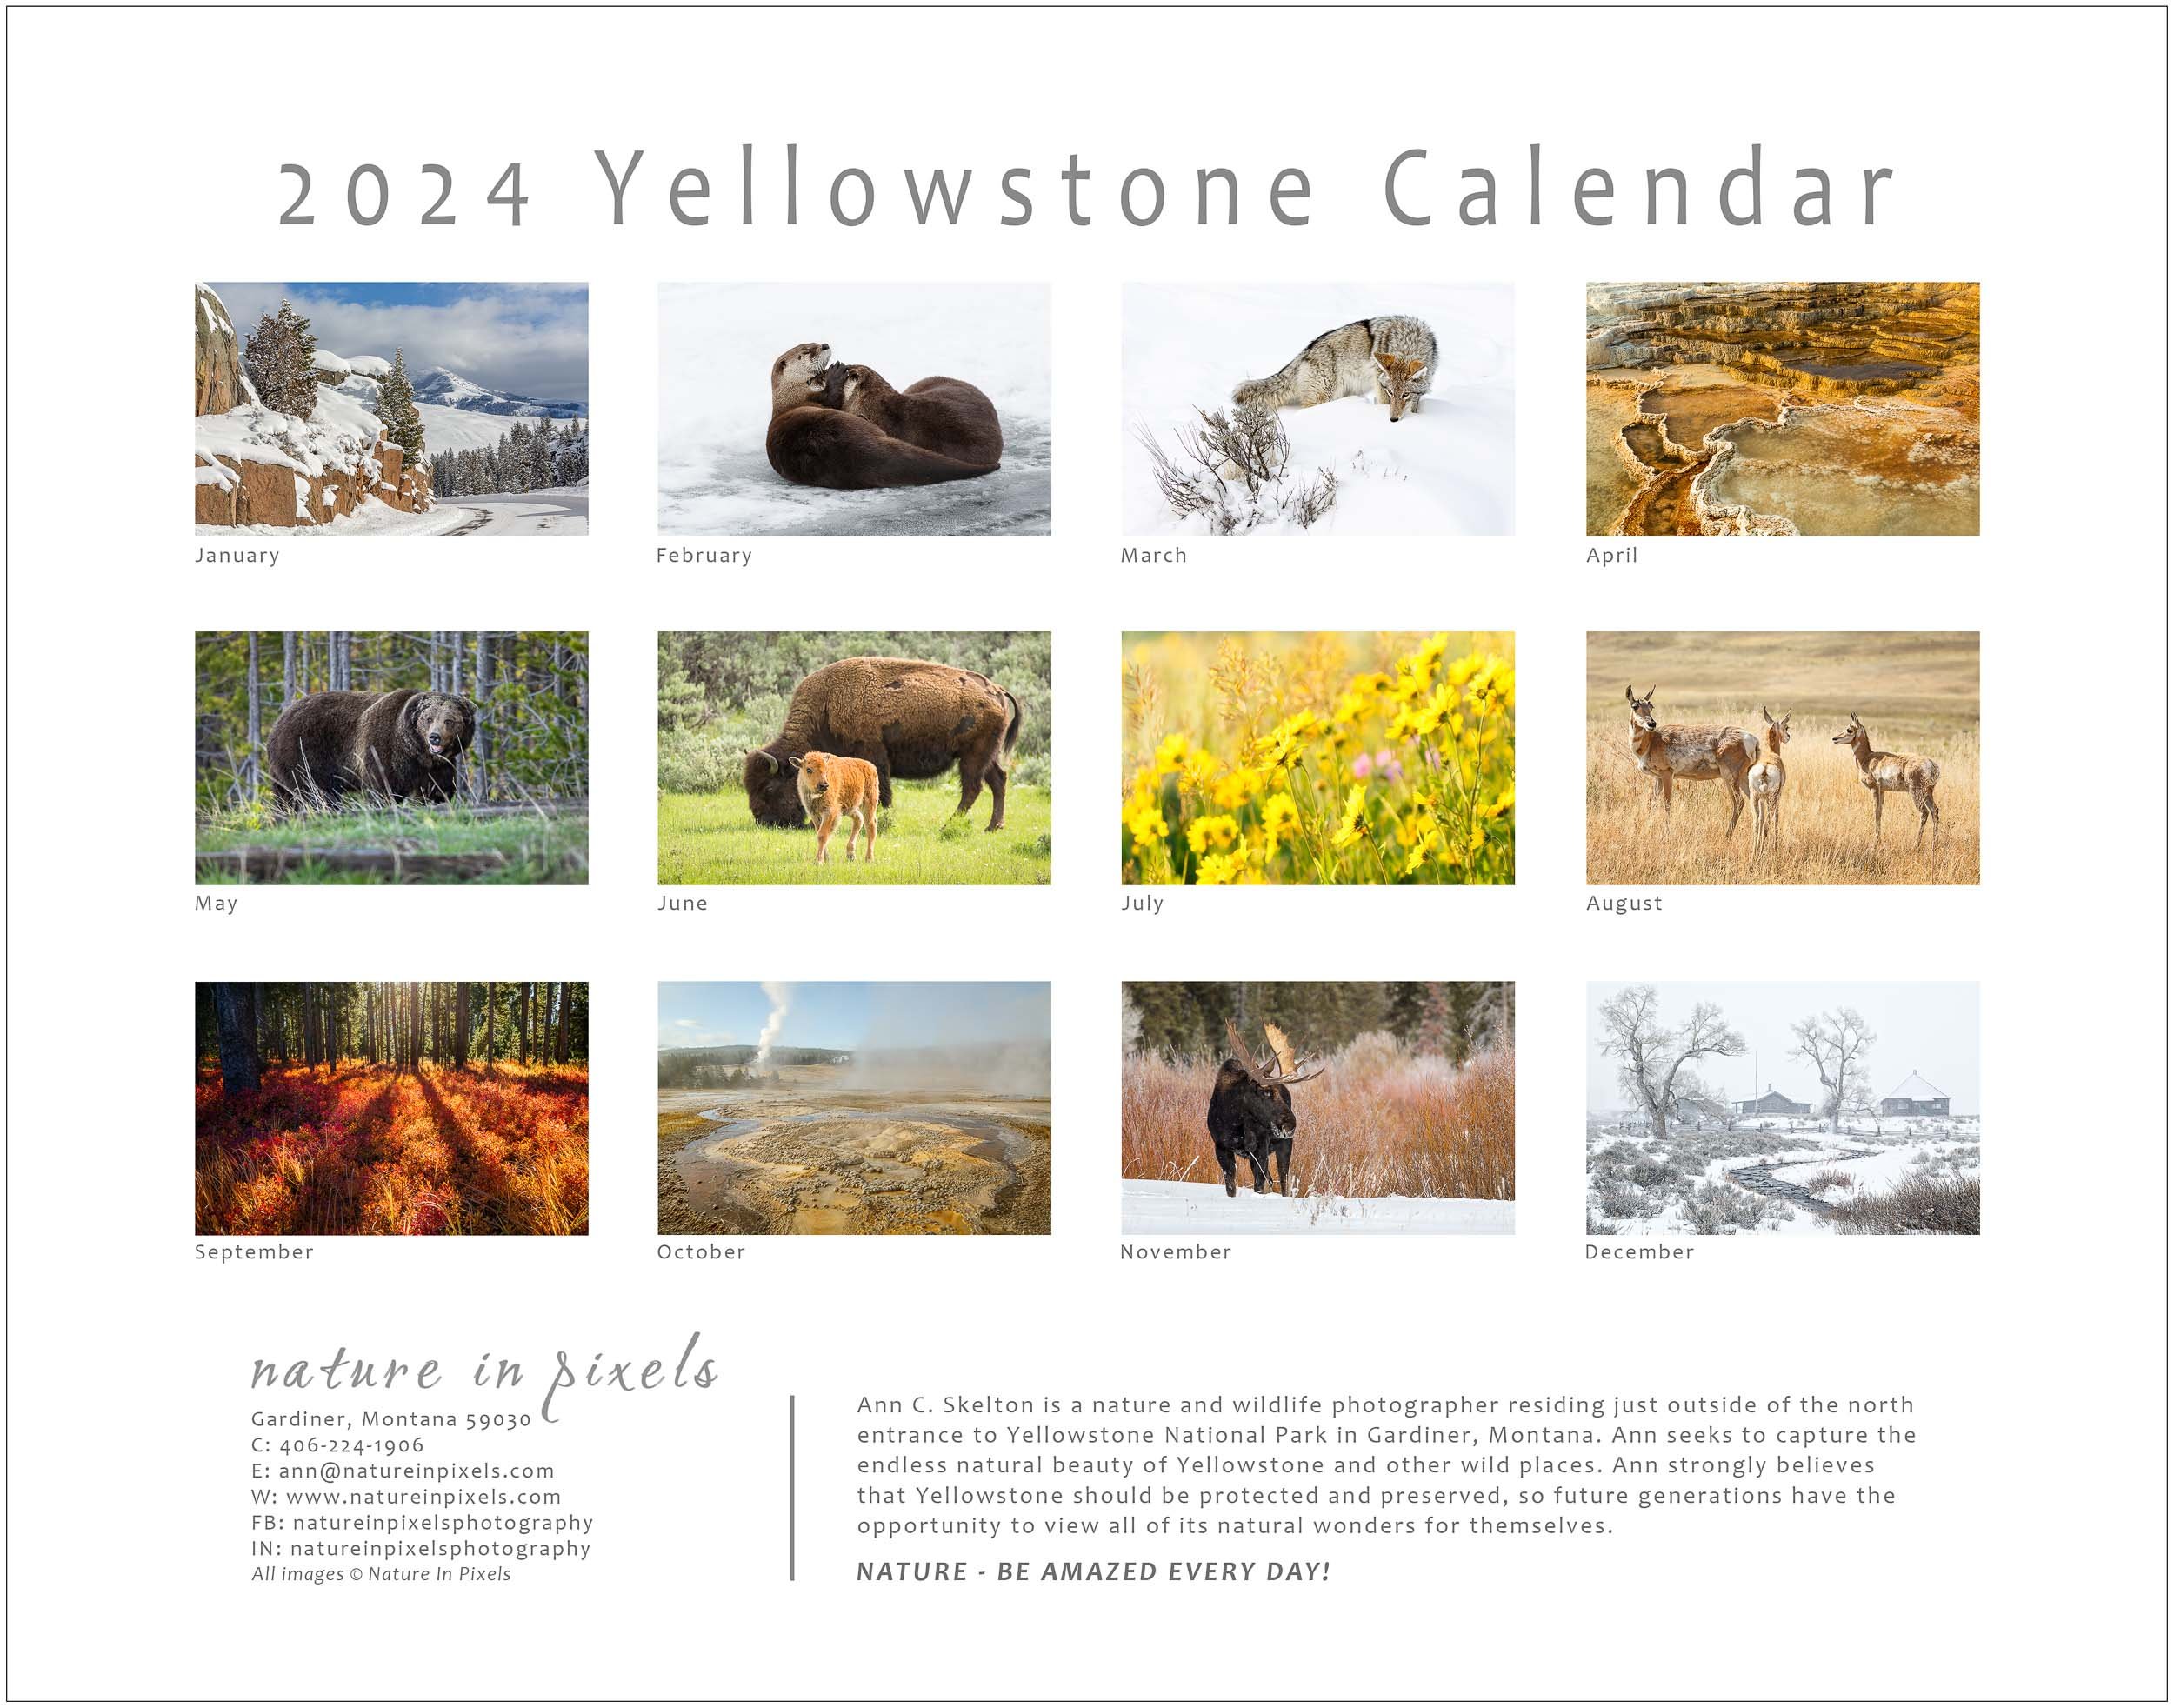 2024 Yellowstone Calendar Yellowstone Wonders LLC